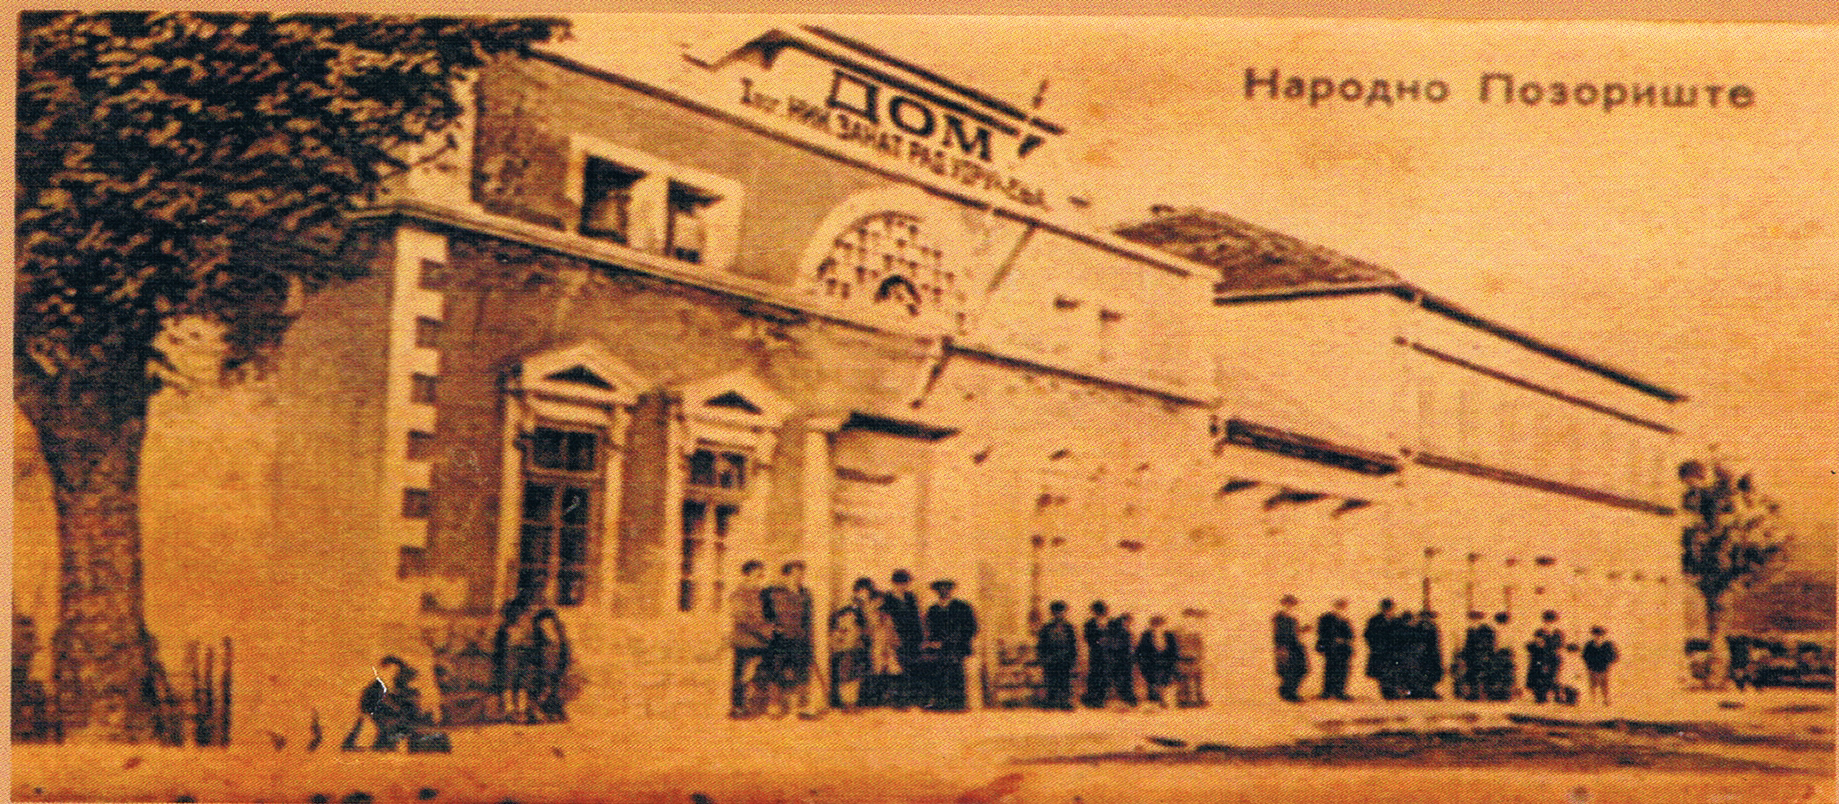 Prvi bioskopi u Nikšiću